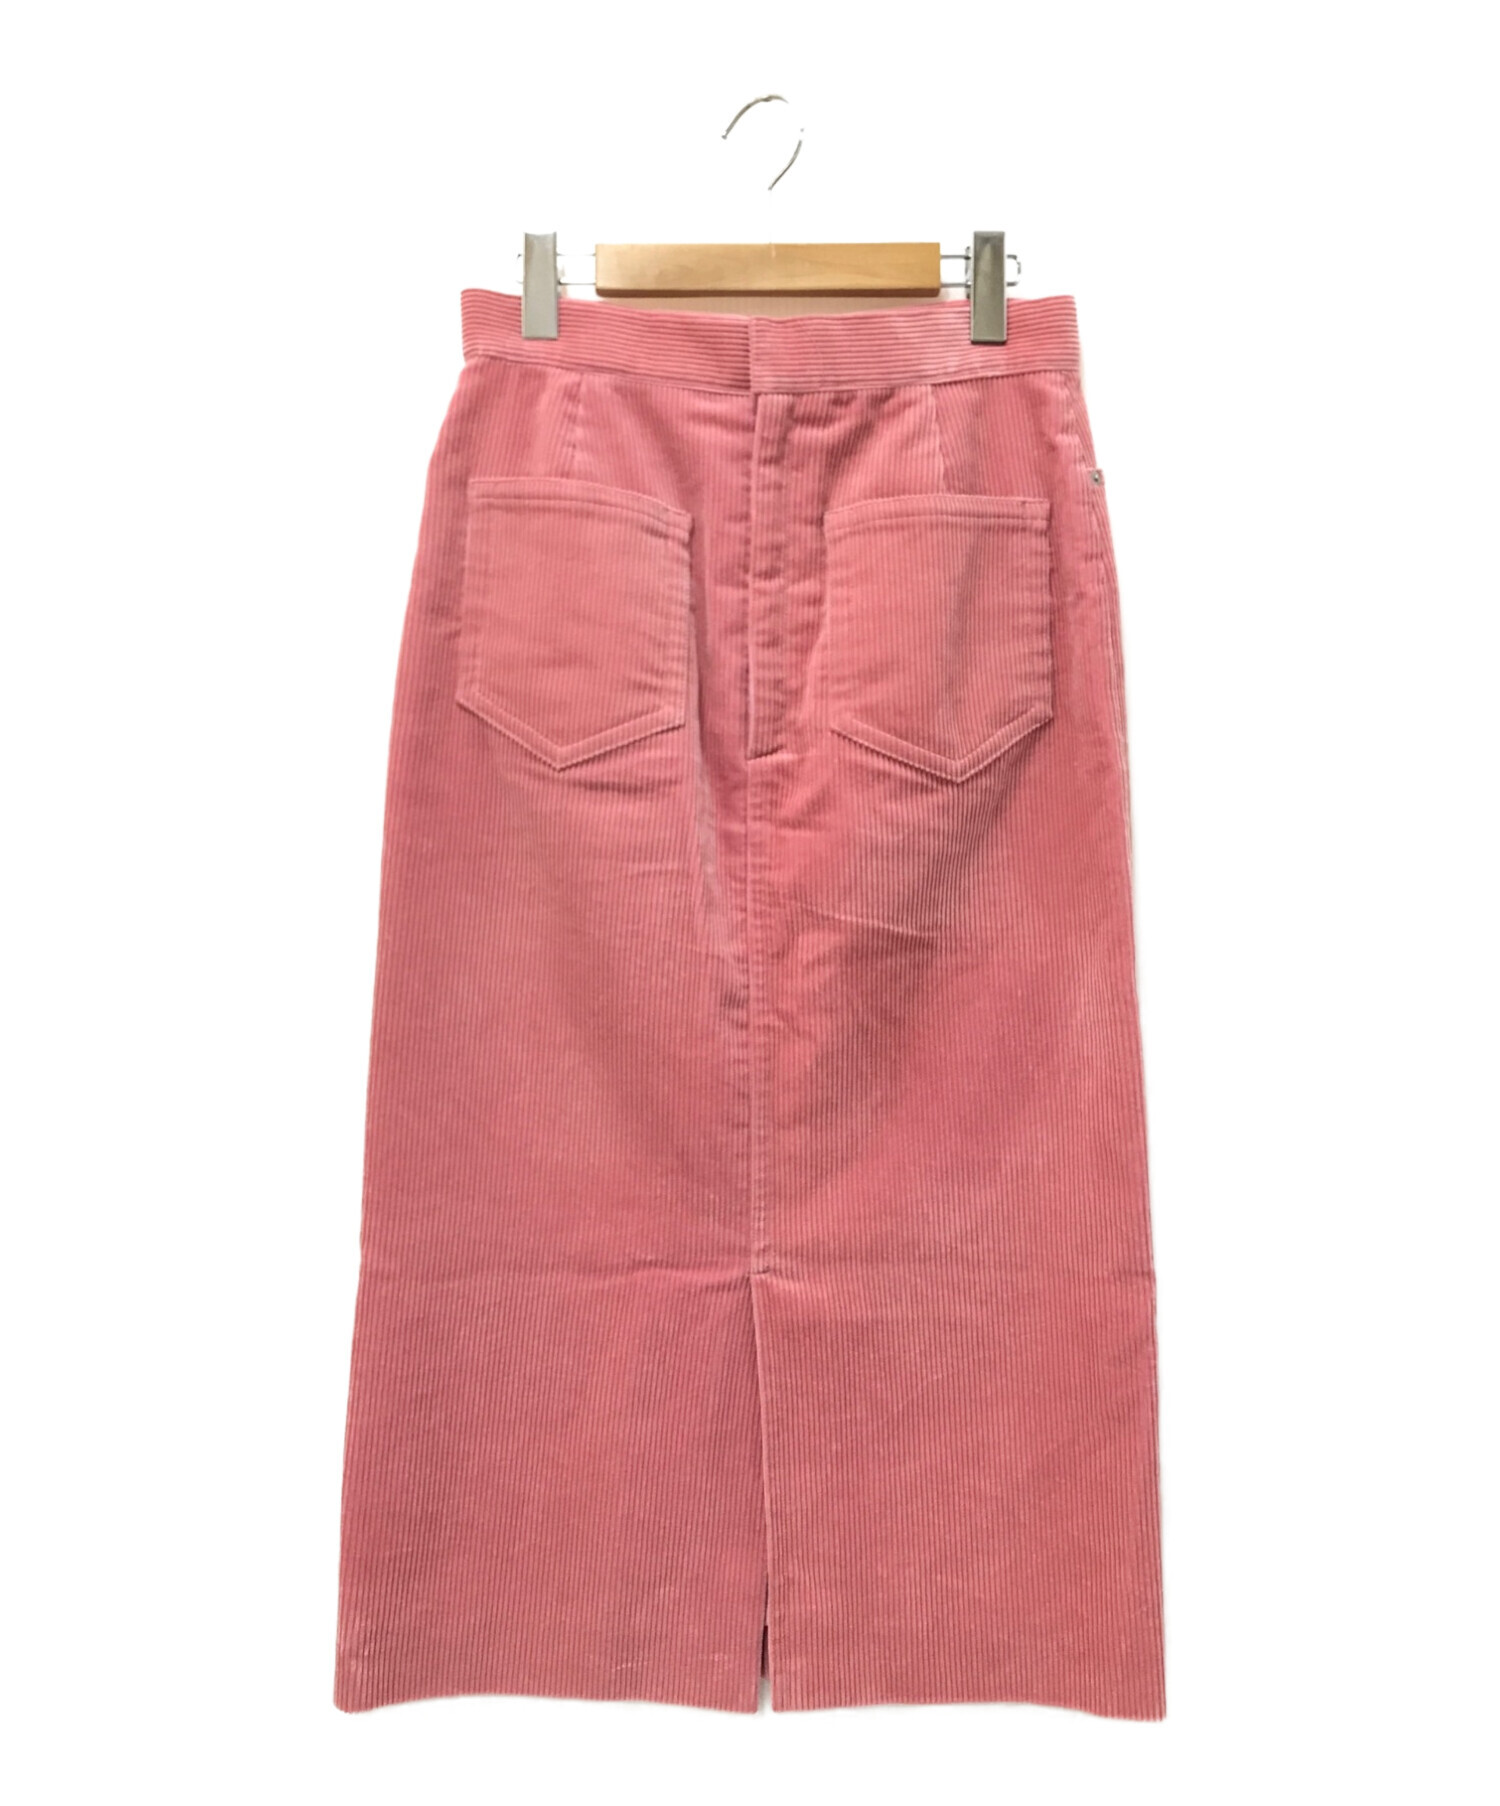 BLAMINK (ブラミンク) コーデュロイスカート ピンク サイズ:36